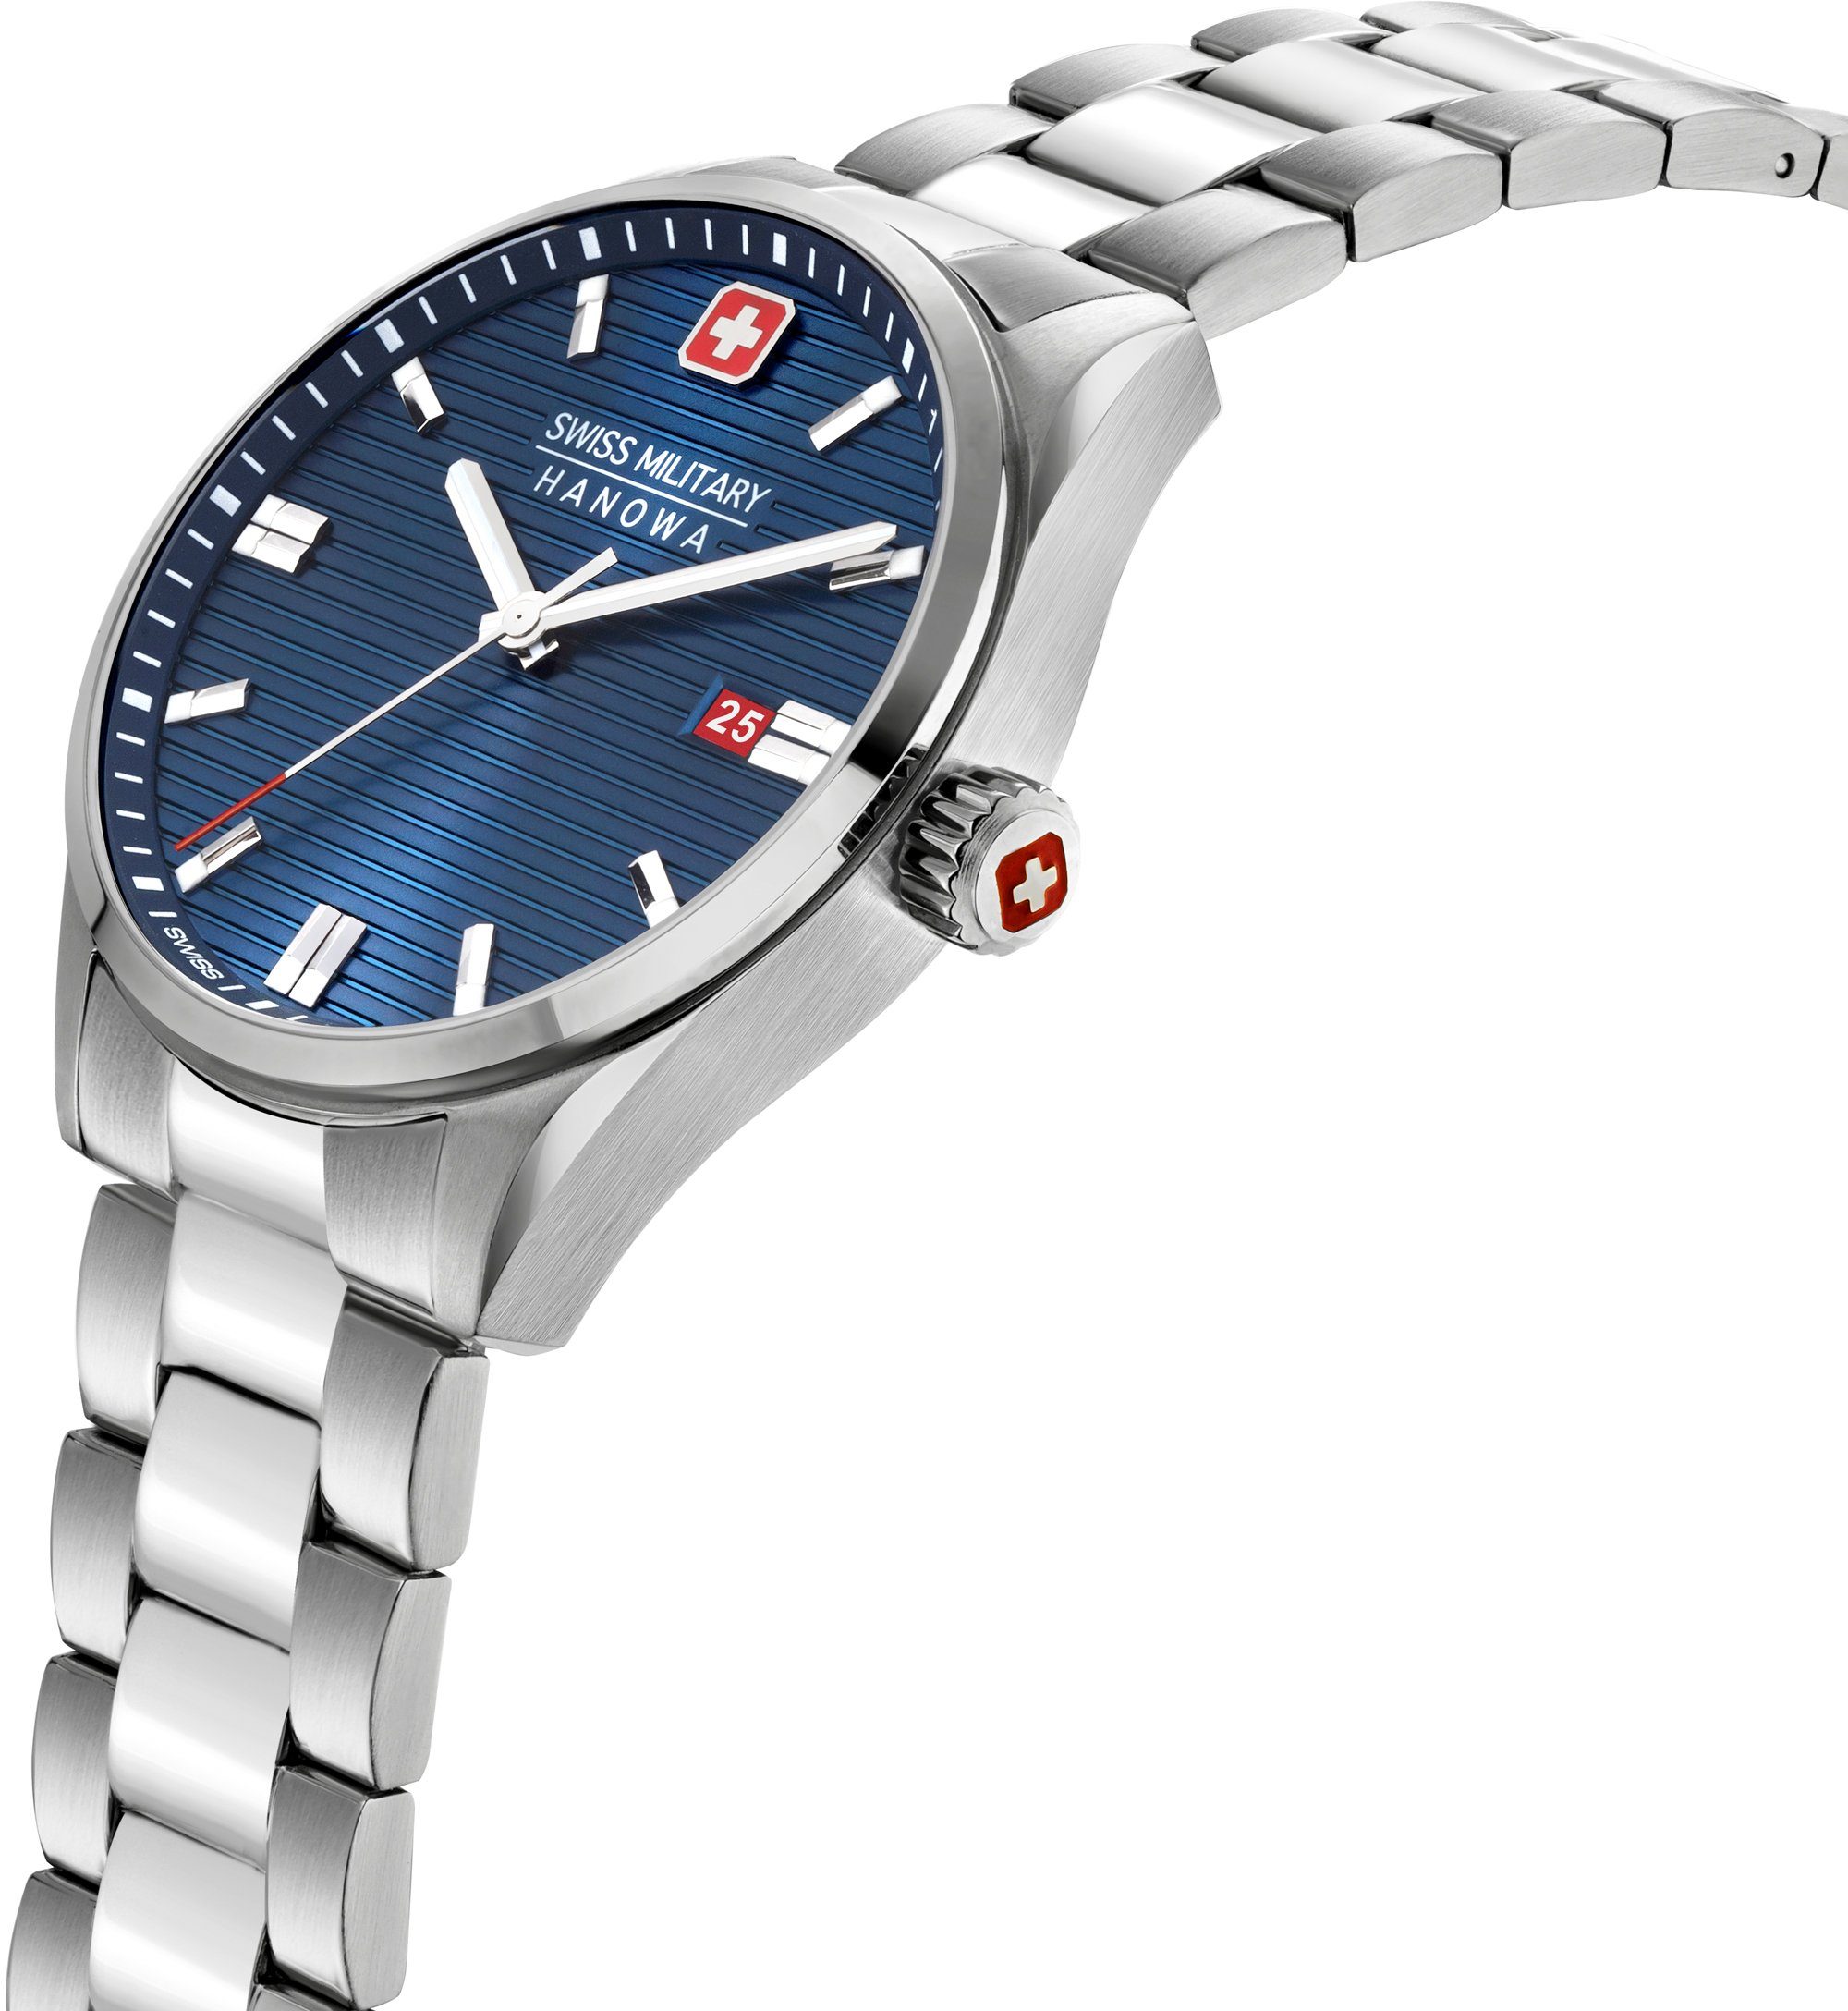 Uhr ROADRUNNER, Schweizer Swiss Hanowa SMWGH2200102 Military Blau